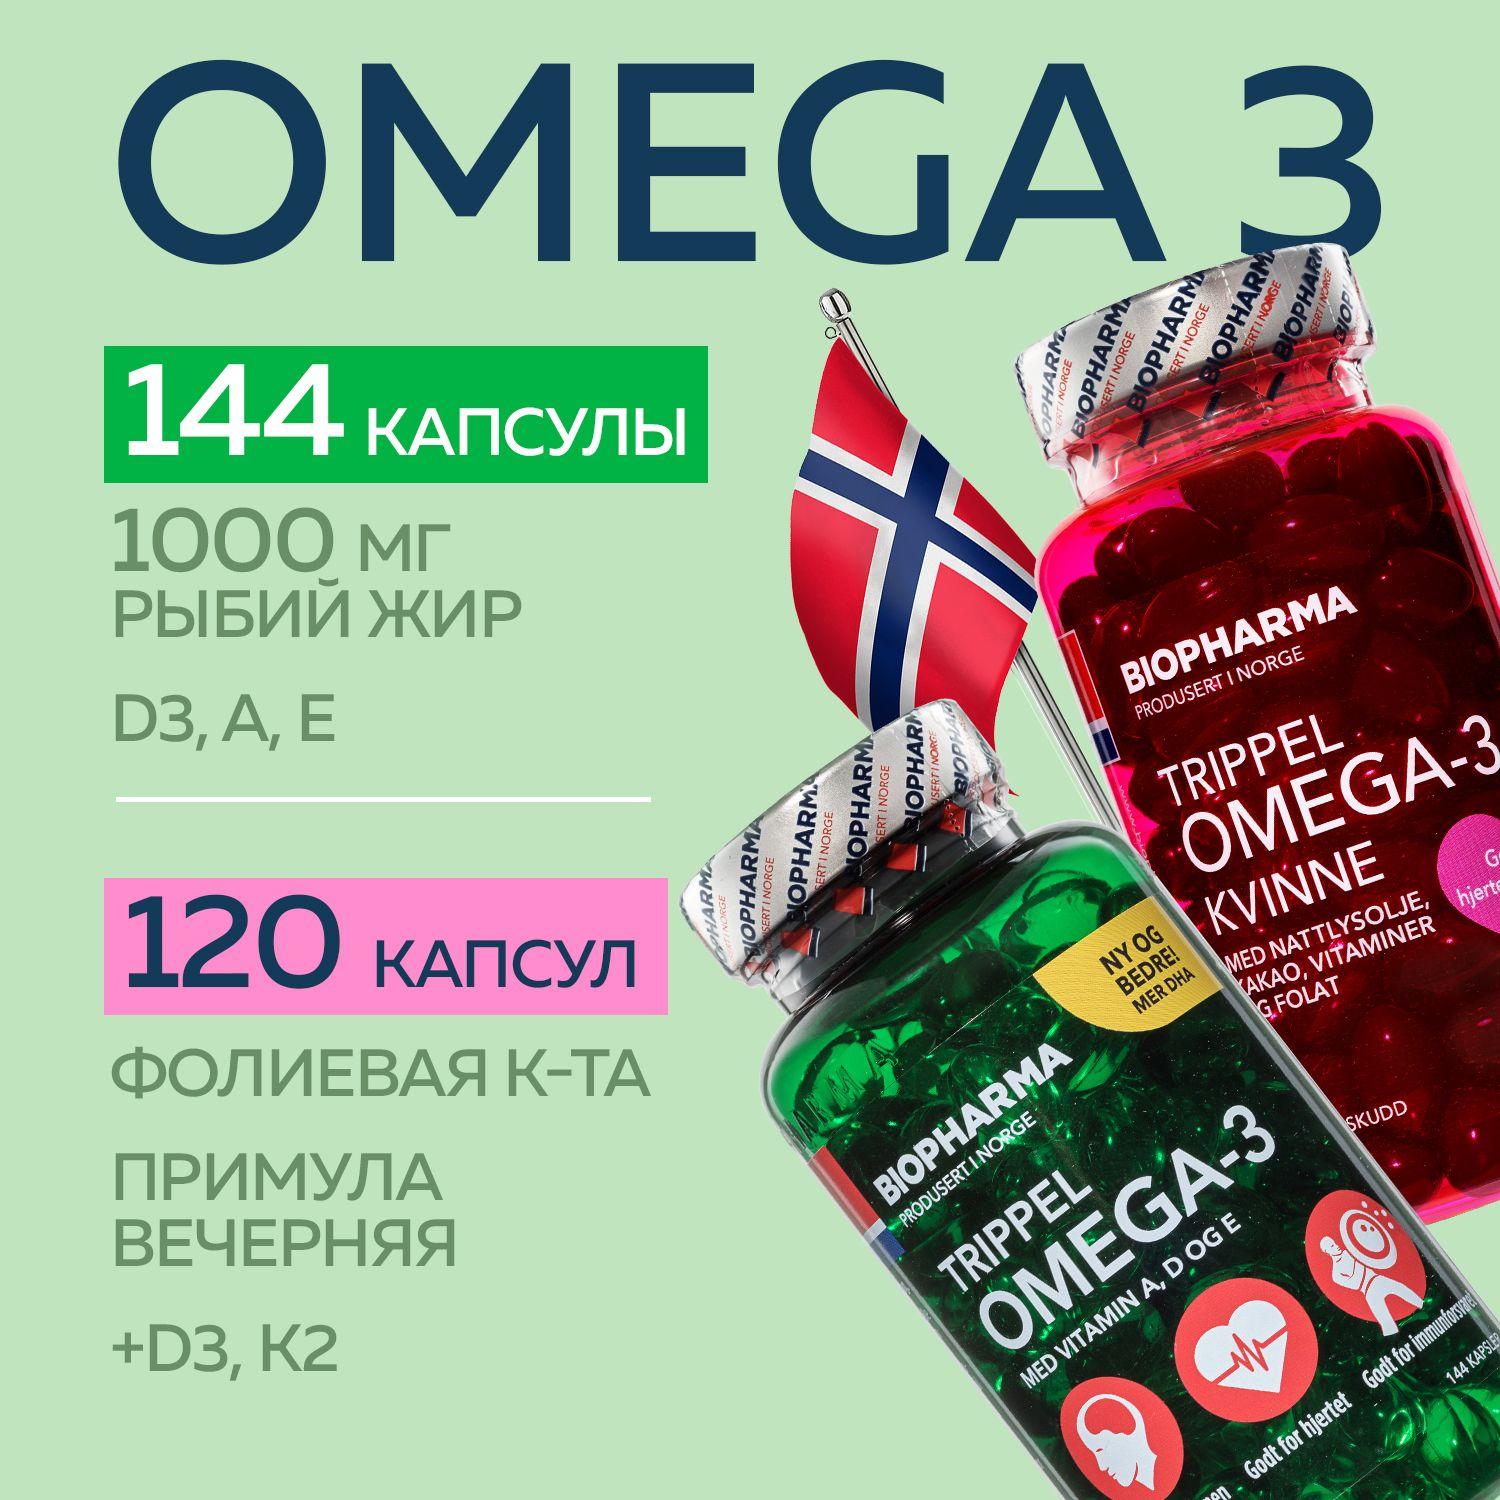 Тройная Омега 3 с витаминами для женщин Trippel Omega-3 Kvinne и Тройная Омега 3 Trippel Omega-3 витамины для мужчин, 2 банки